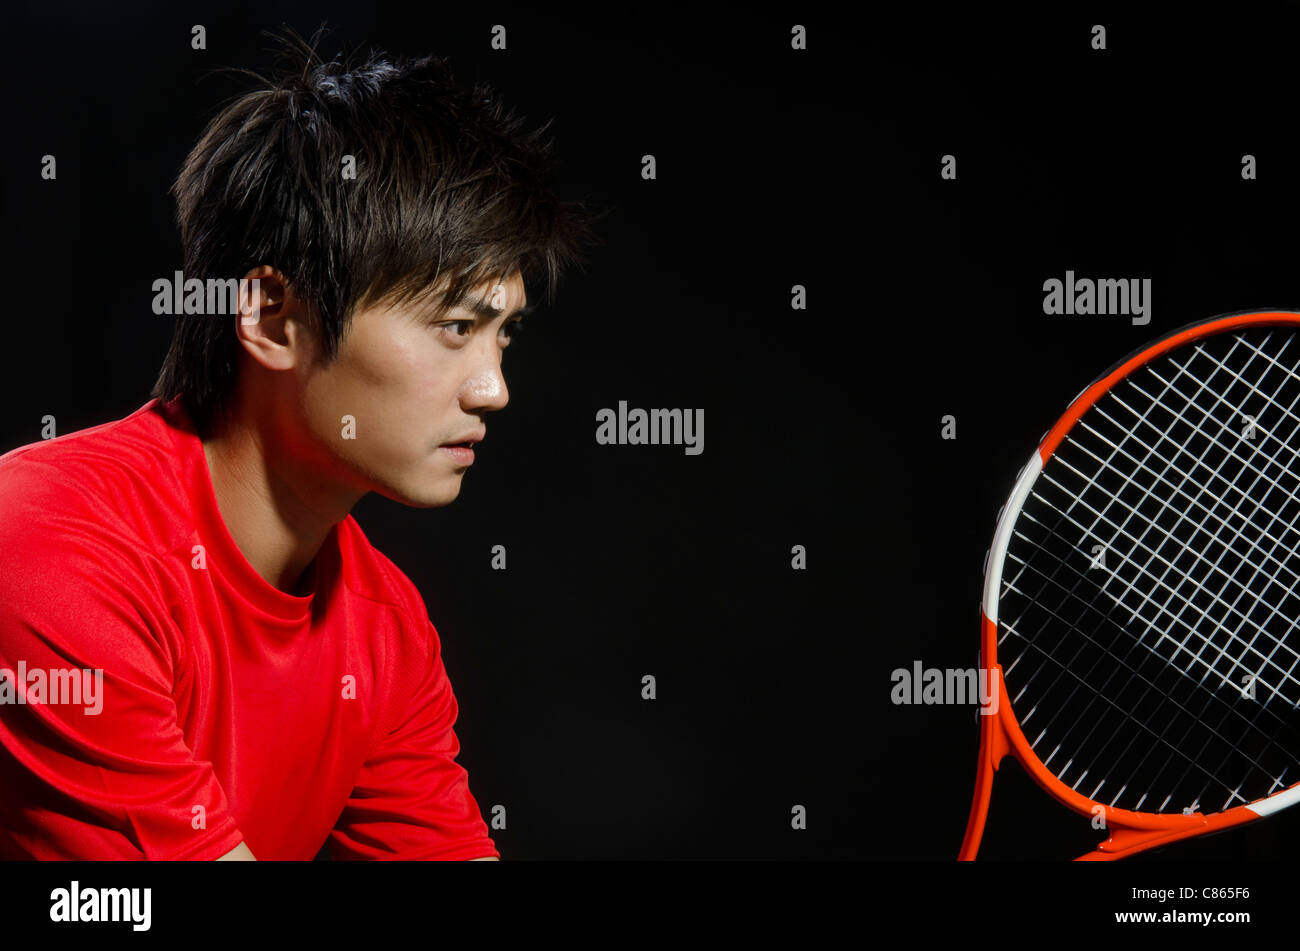 tennis player Stock Photo